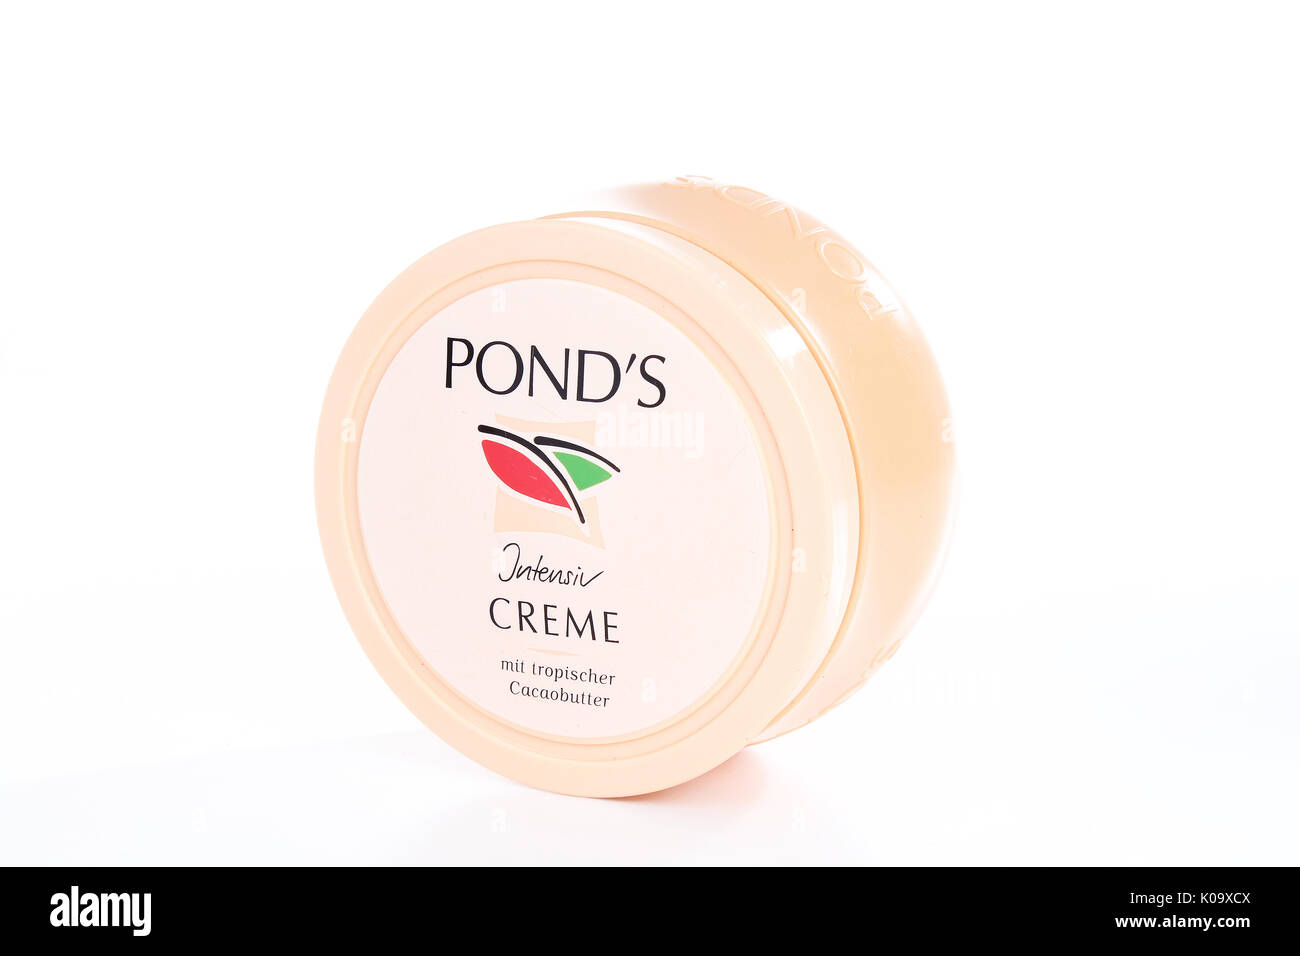 Pond's creme on isolated white studio background Stock Photo - Alamy